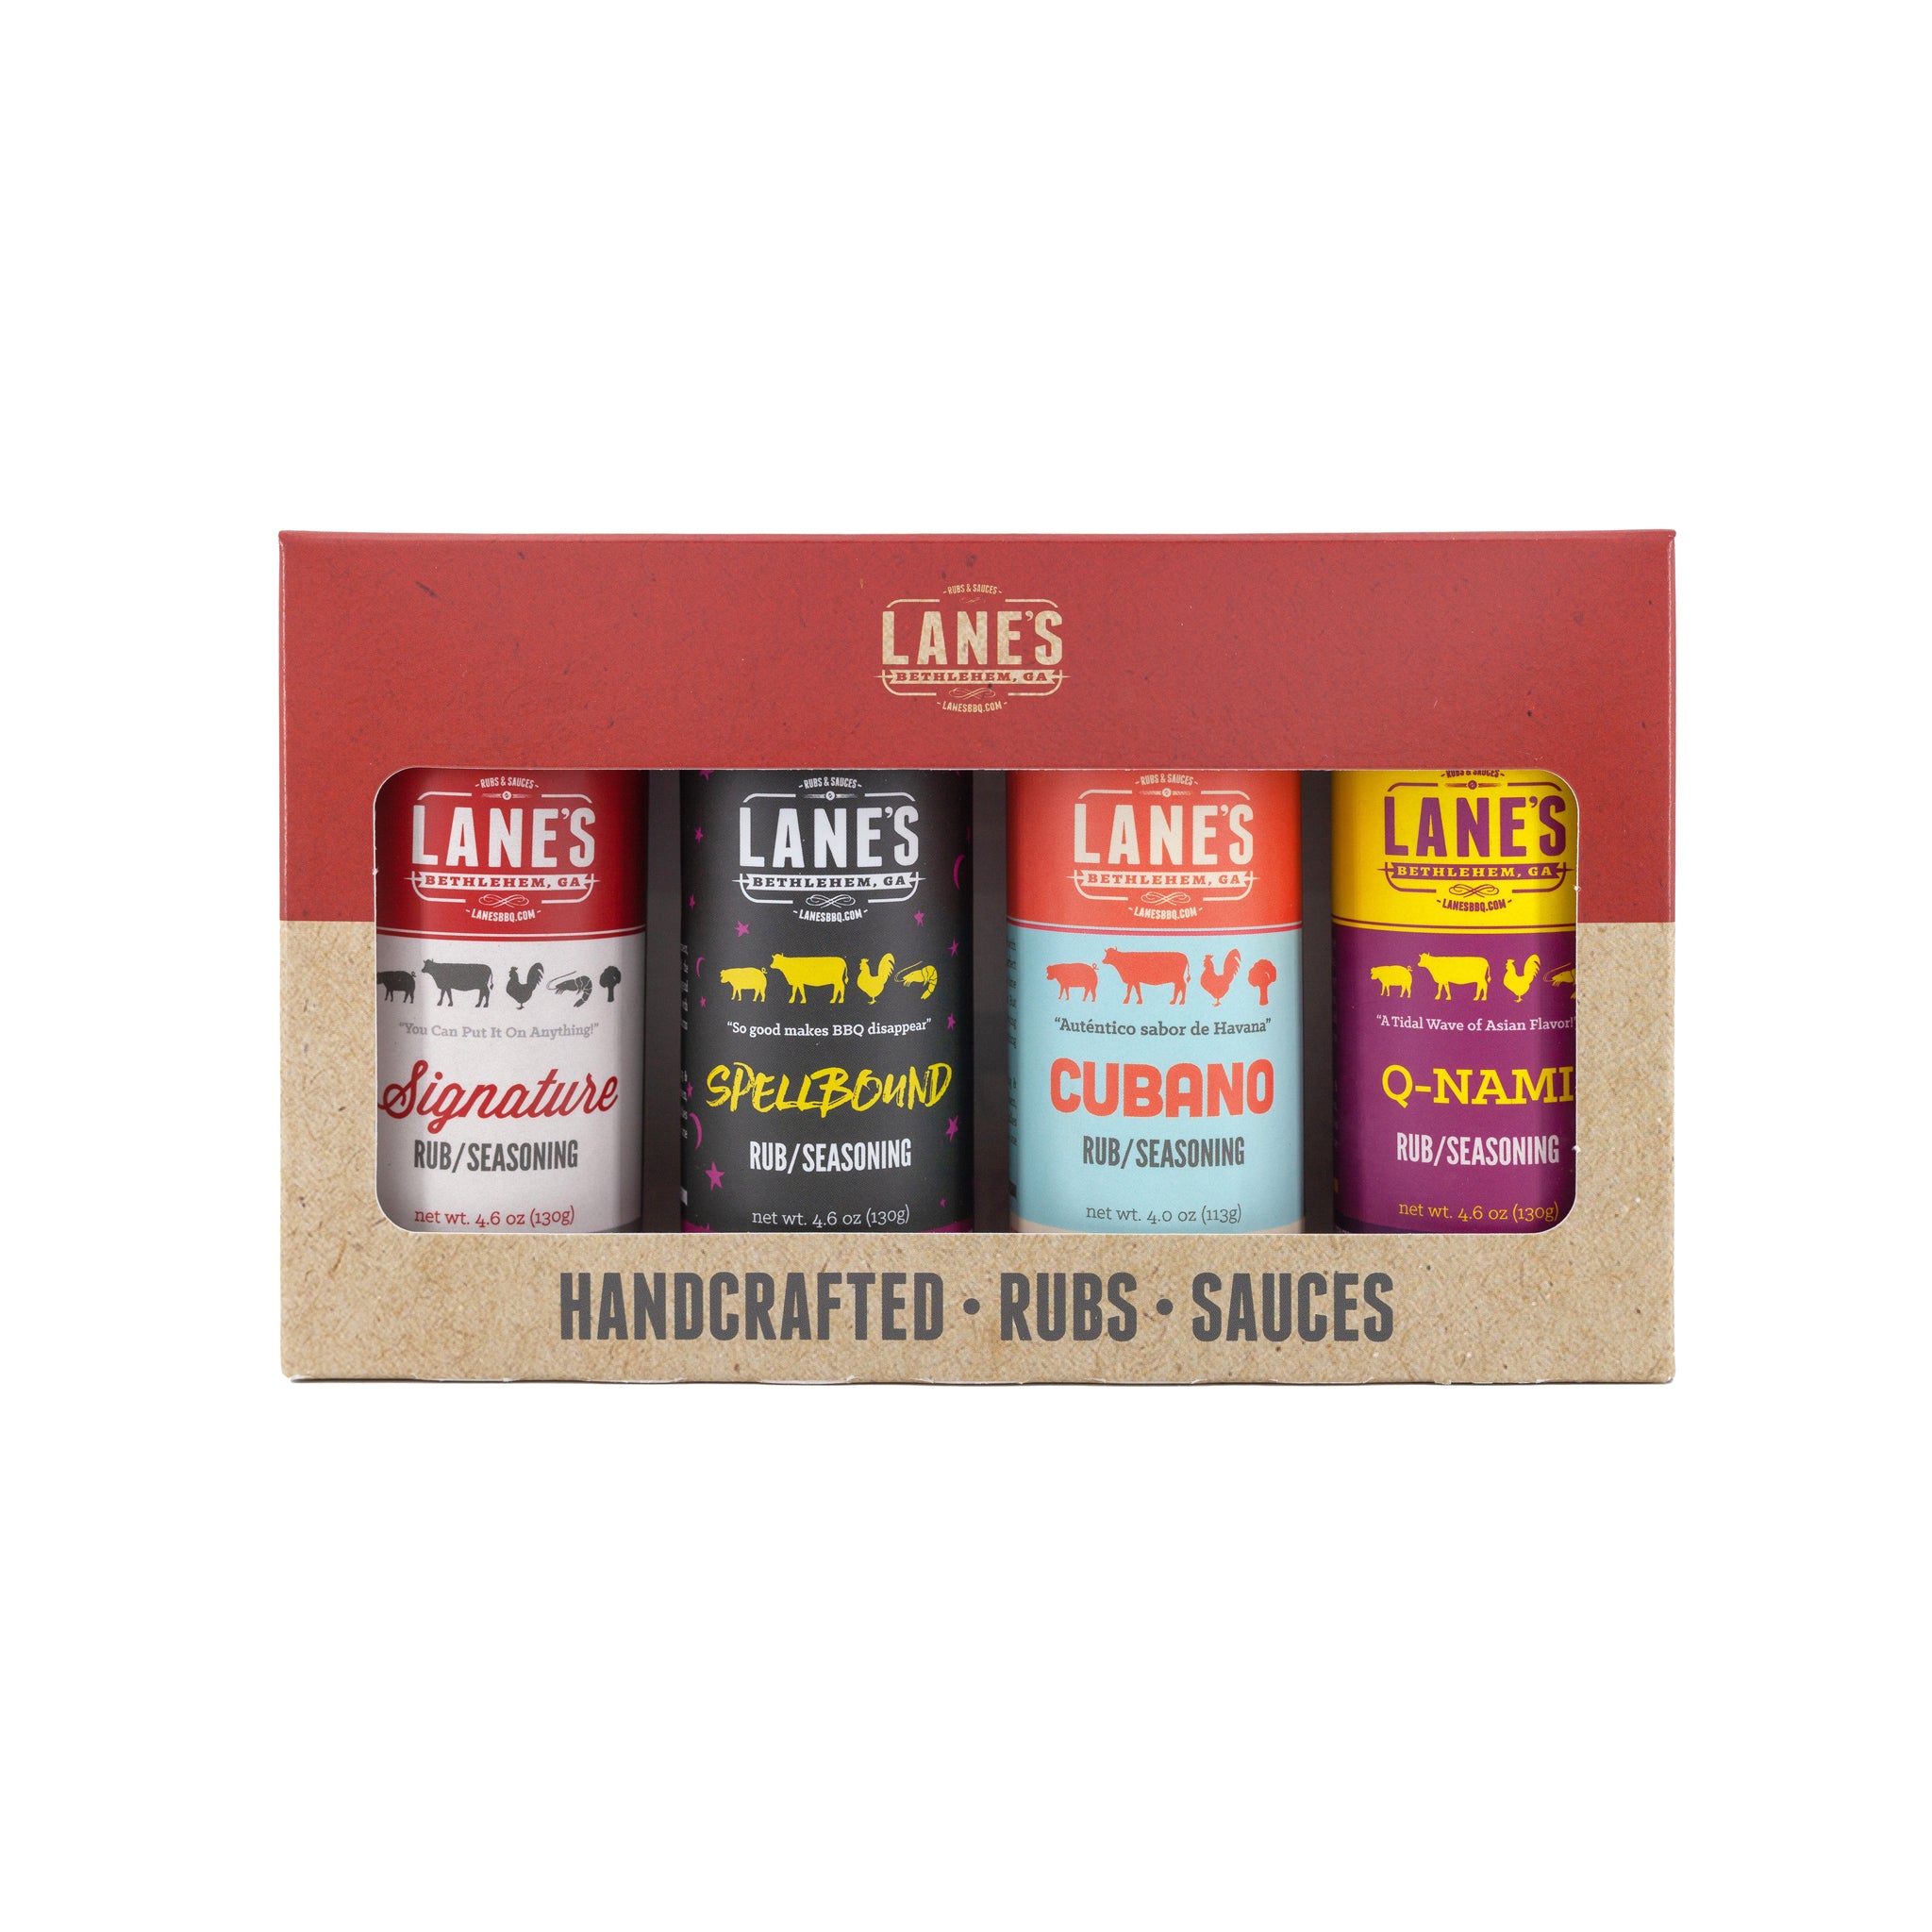 BBQ Seasoning Gift Box by Spice Inspired - BBQ Gift Set with Sauce,  Seasoning & Rub 